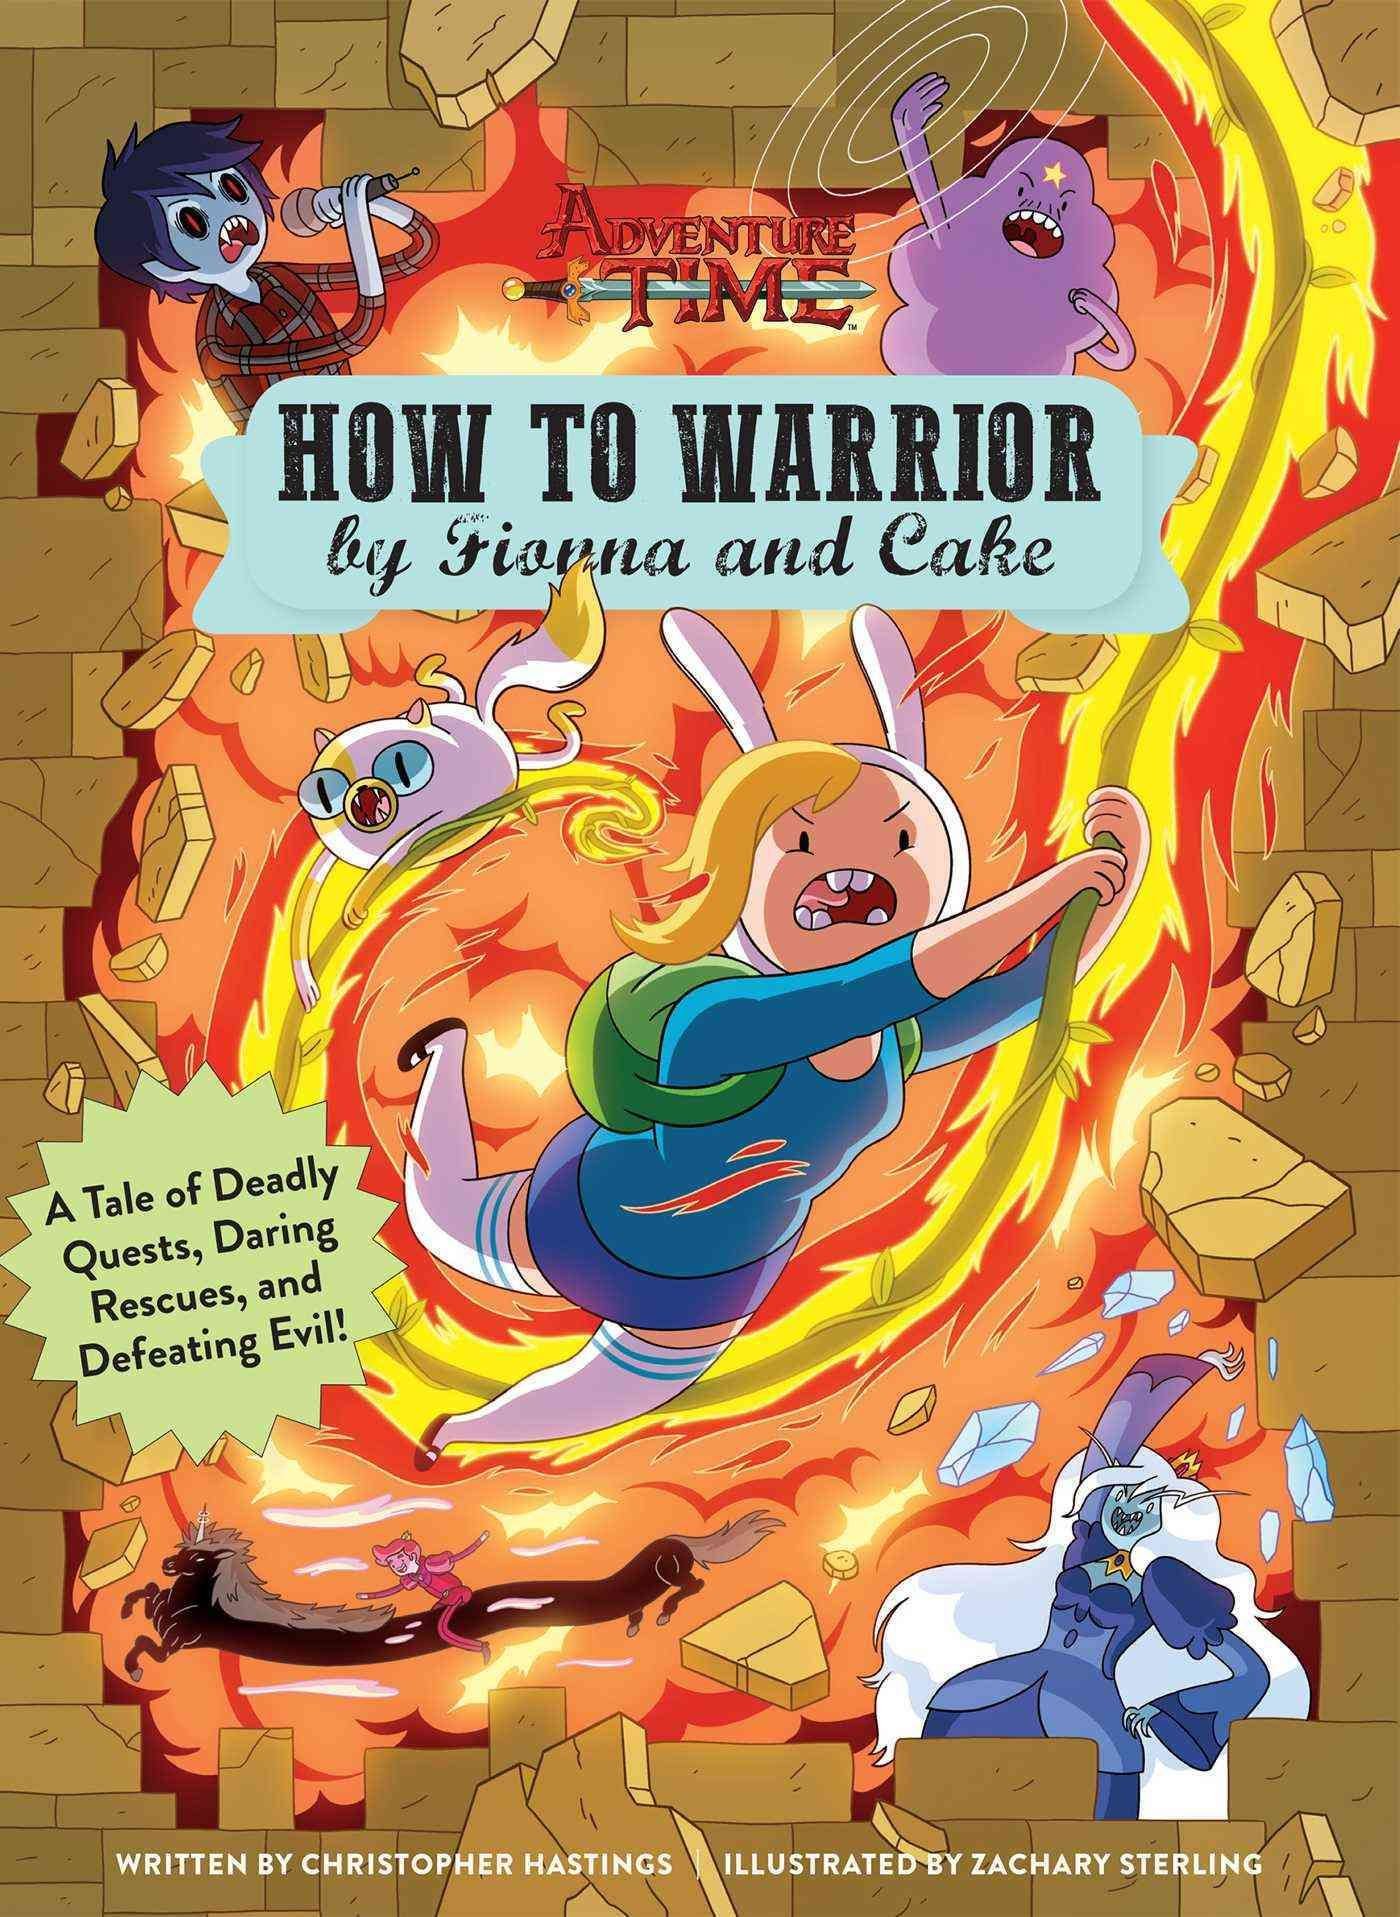 Adventure Time Card Wars: Fionna vs Cake, Board Game